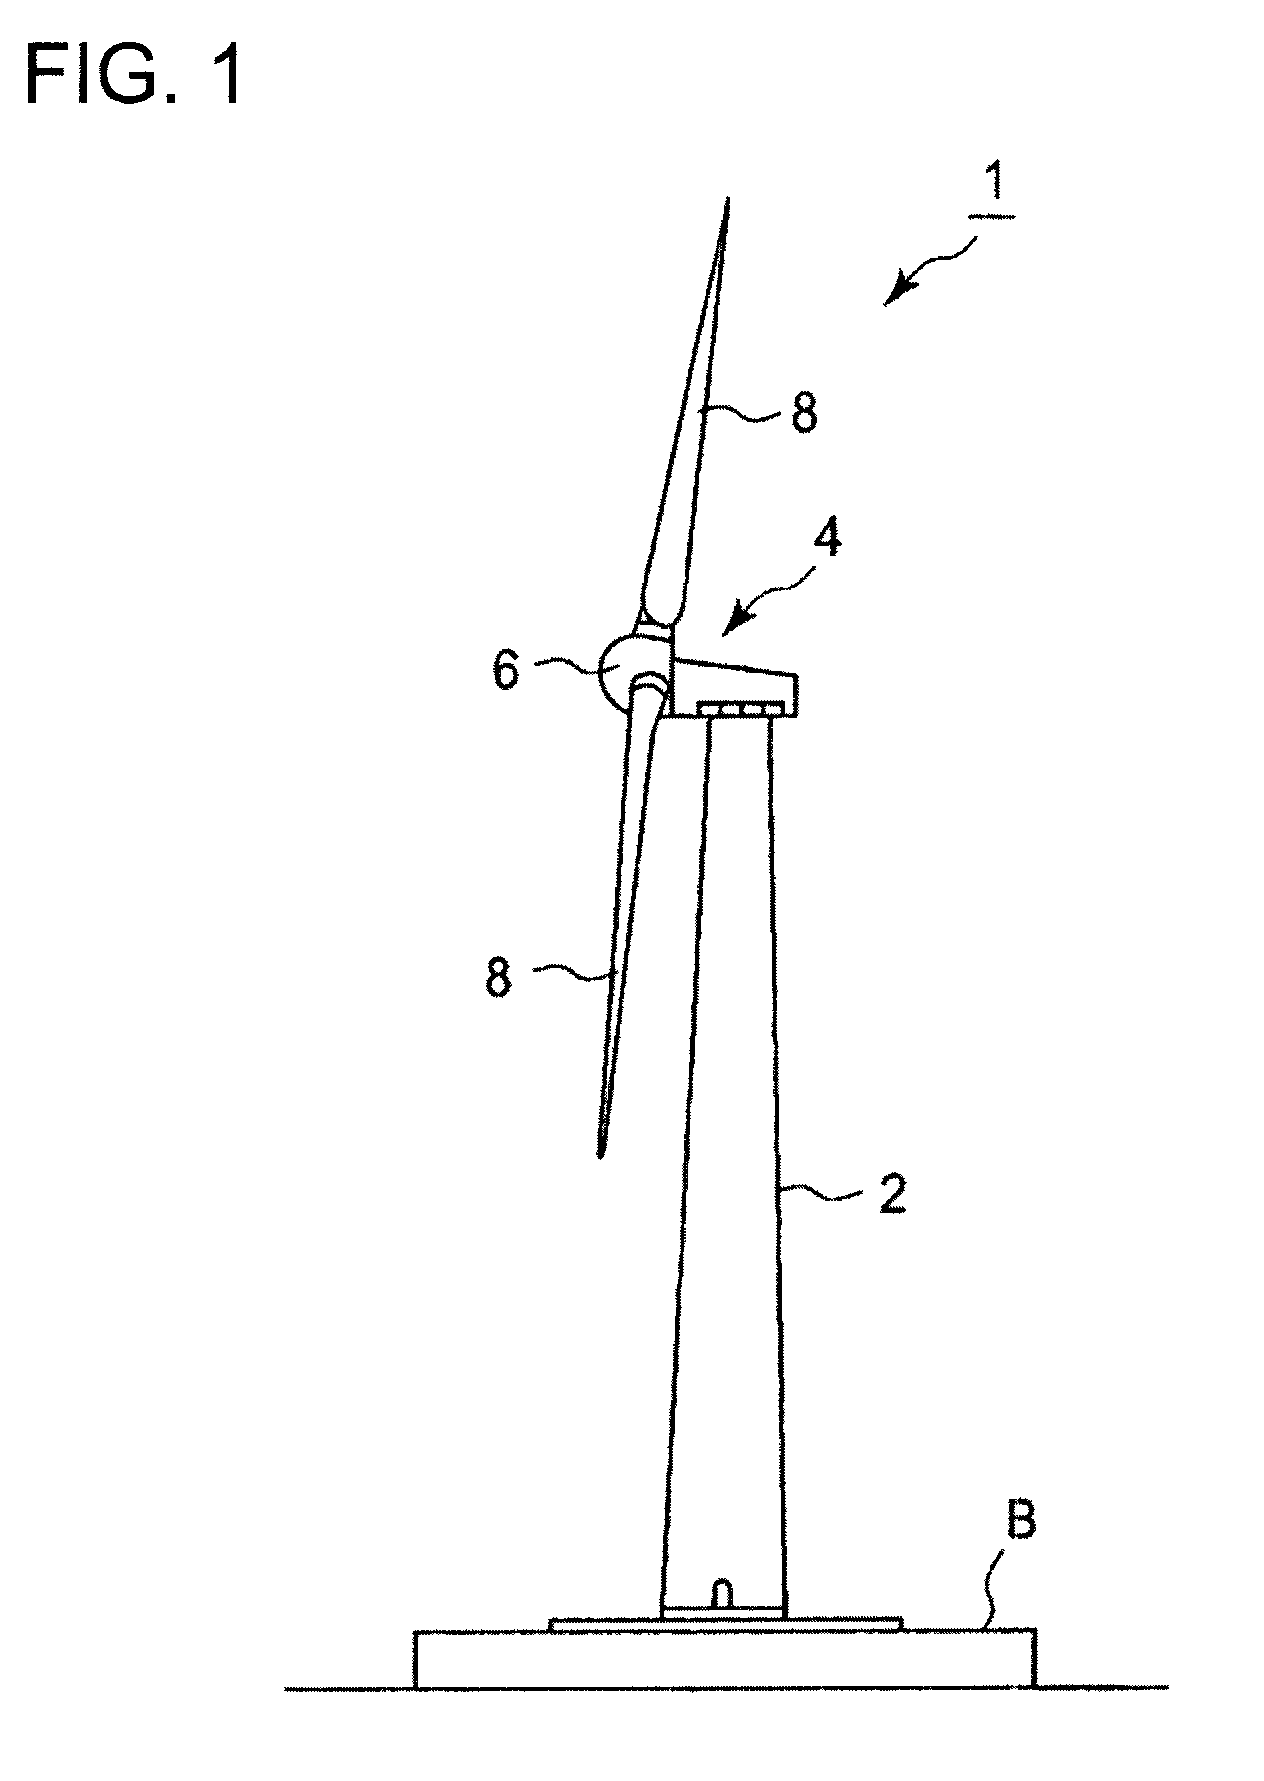 Method of repairing bearing of wind turbine generator